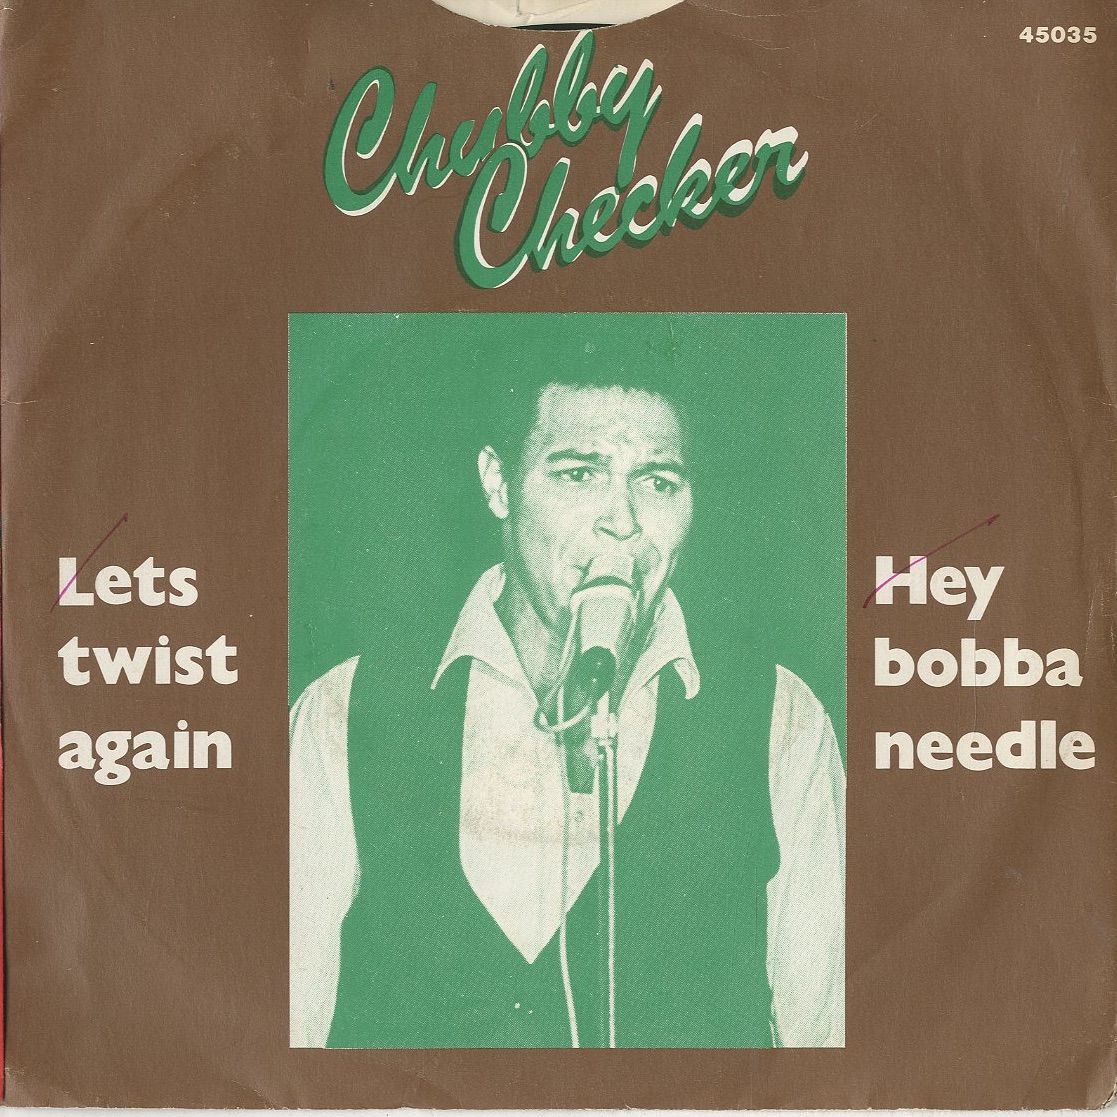 Albumcover Chubby Checker - Lets twist again / Hey bobba needle